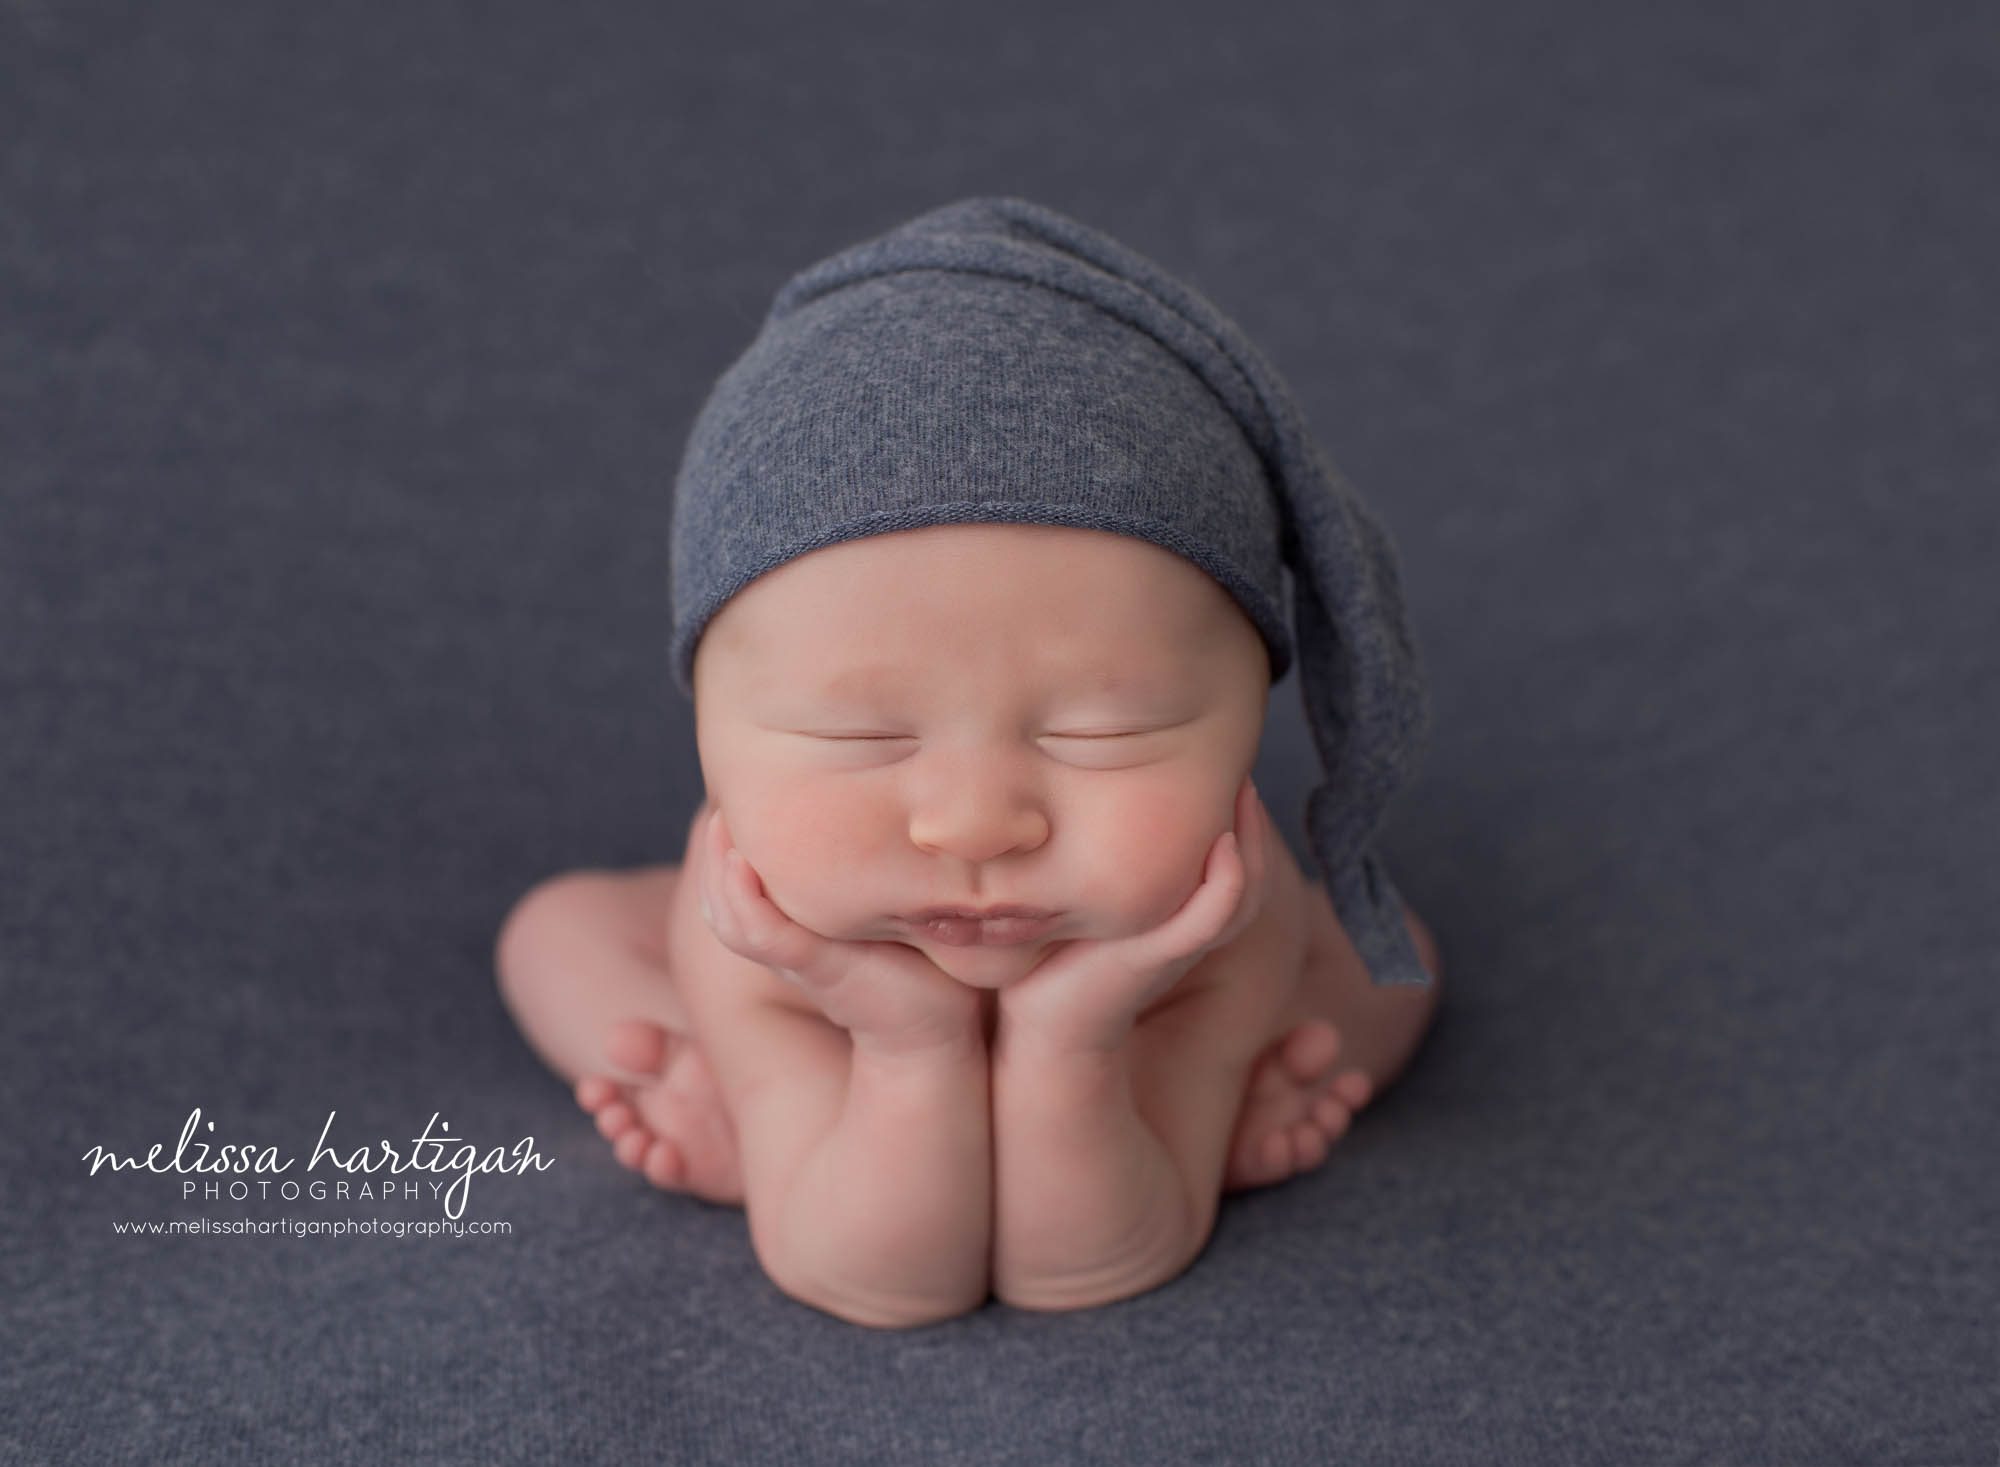 newborn baby bpy posed froggy pose with blue sleepy cap on